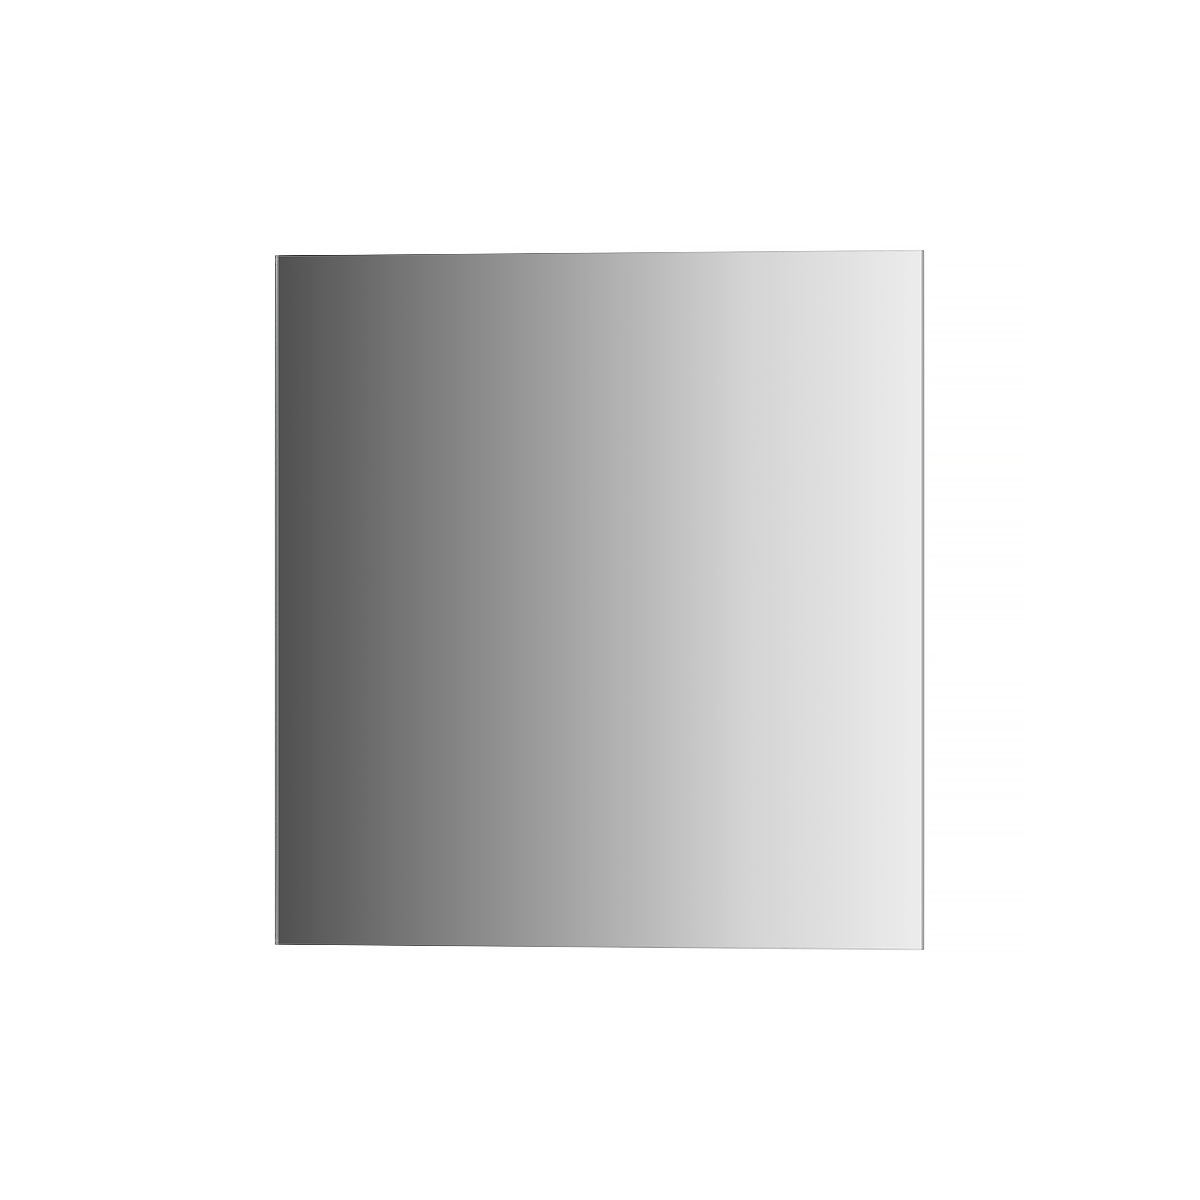 Зеркальная плитка со шлифованной кромкой  Evoform BY 1407 25x25см зеркальная плитка mirox 3g sensea nnlm28 квадратная 20x20 см глянцевая серебро 1 шт